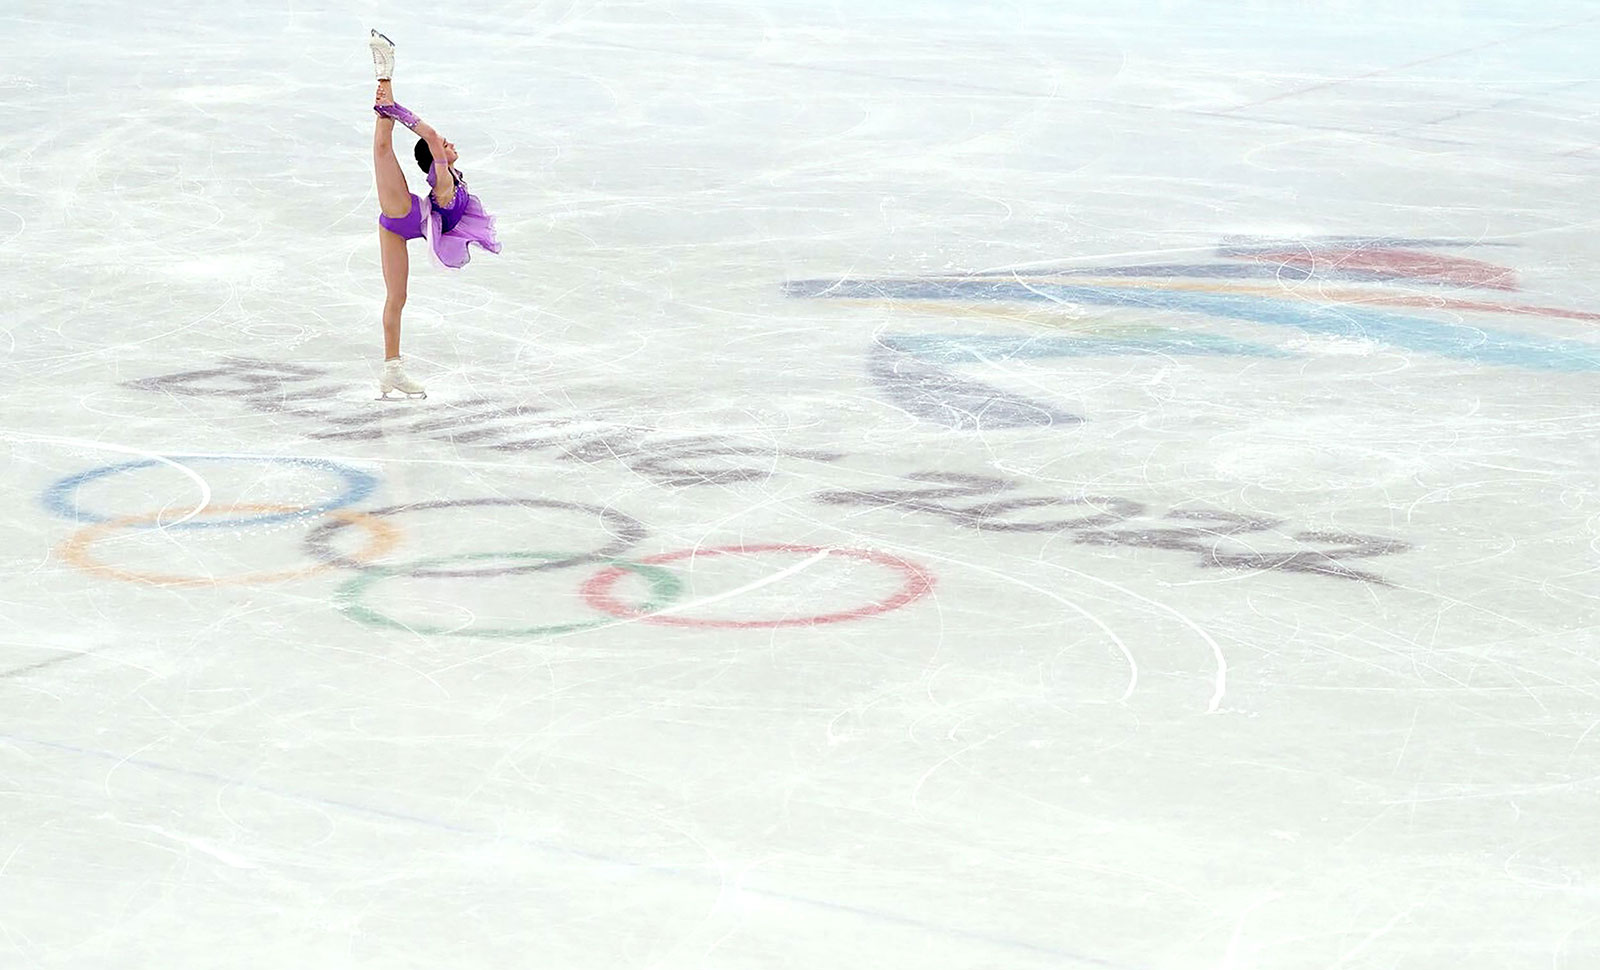 Russian figure skater Kamila Valieva performs her short program at the Beijing Winter Olympics on February 15.